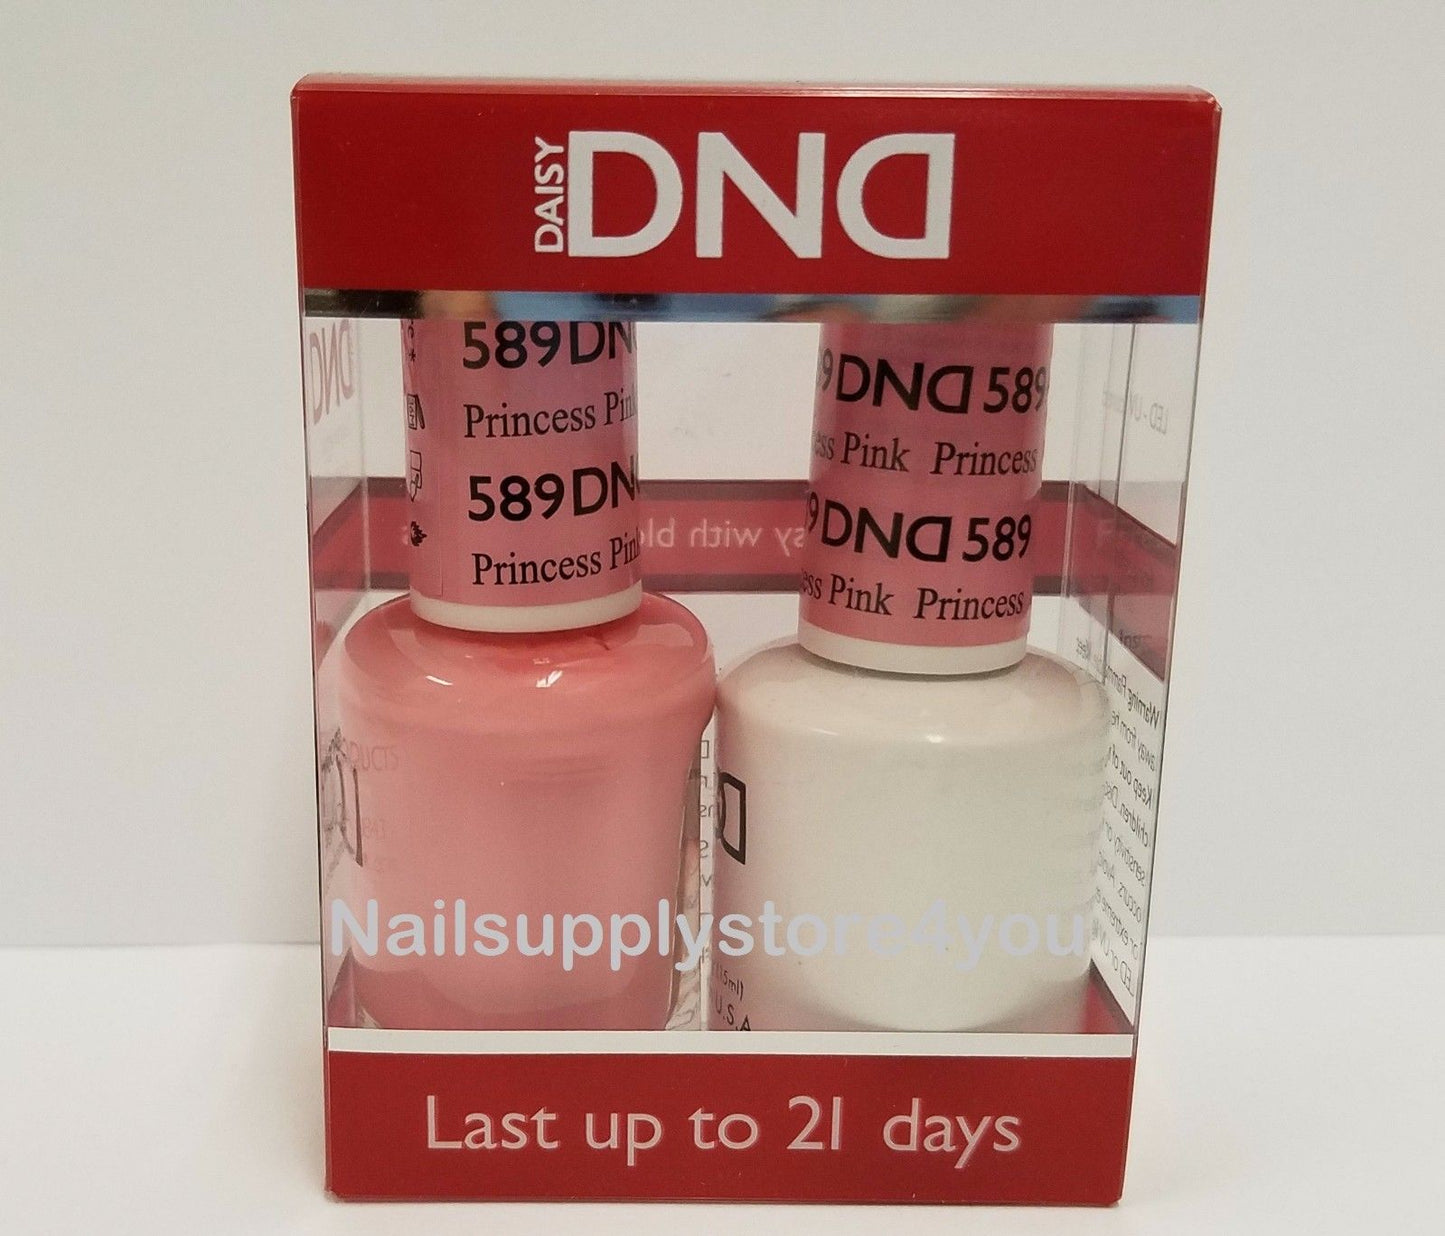 DND Duo - Soak Off GEL + MATCHING Nail Polish Colors SET